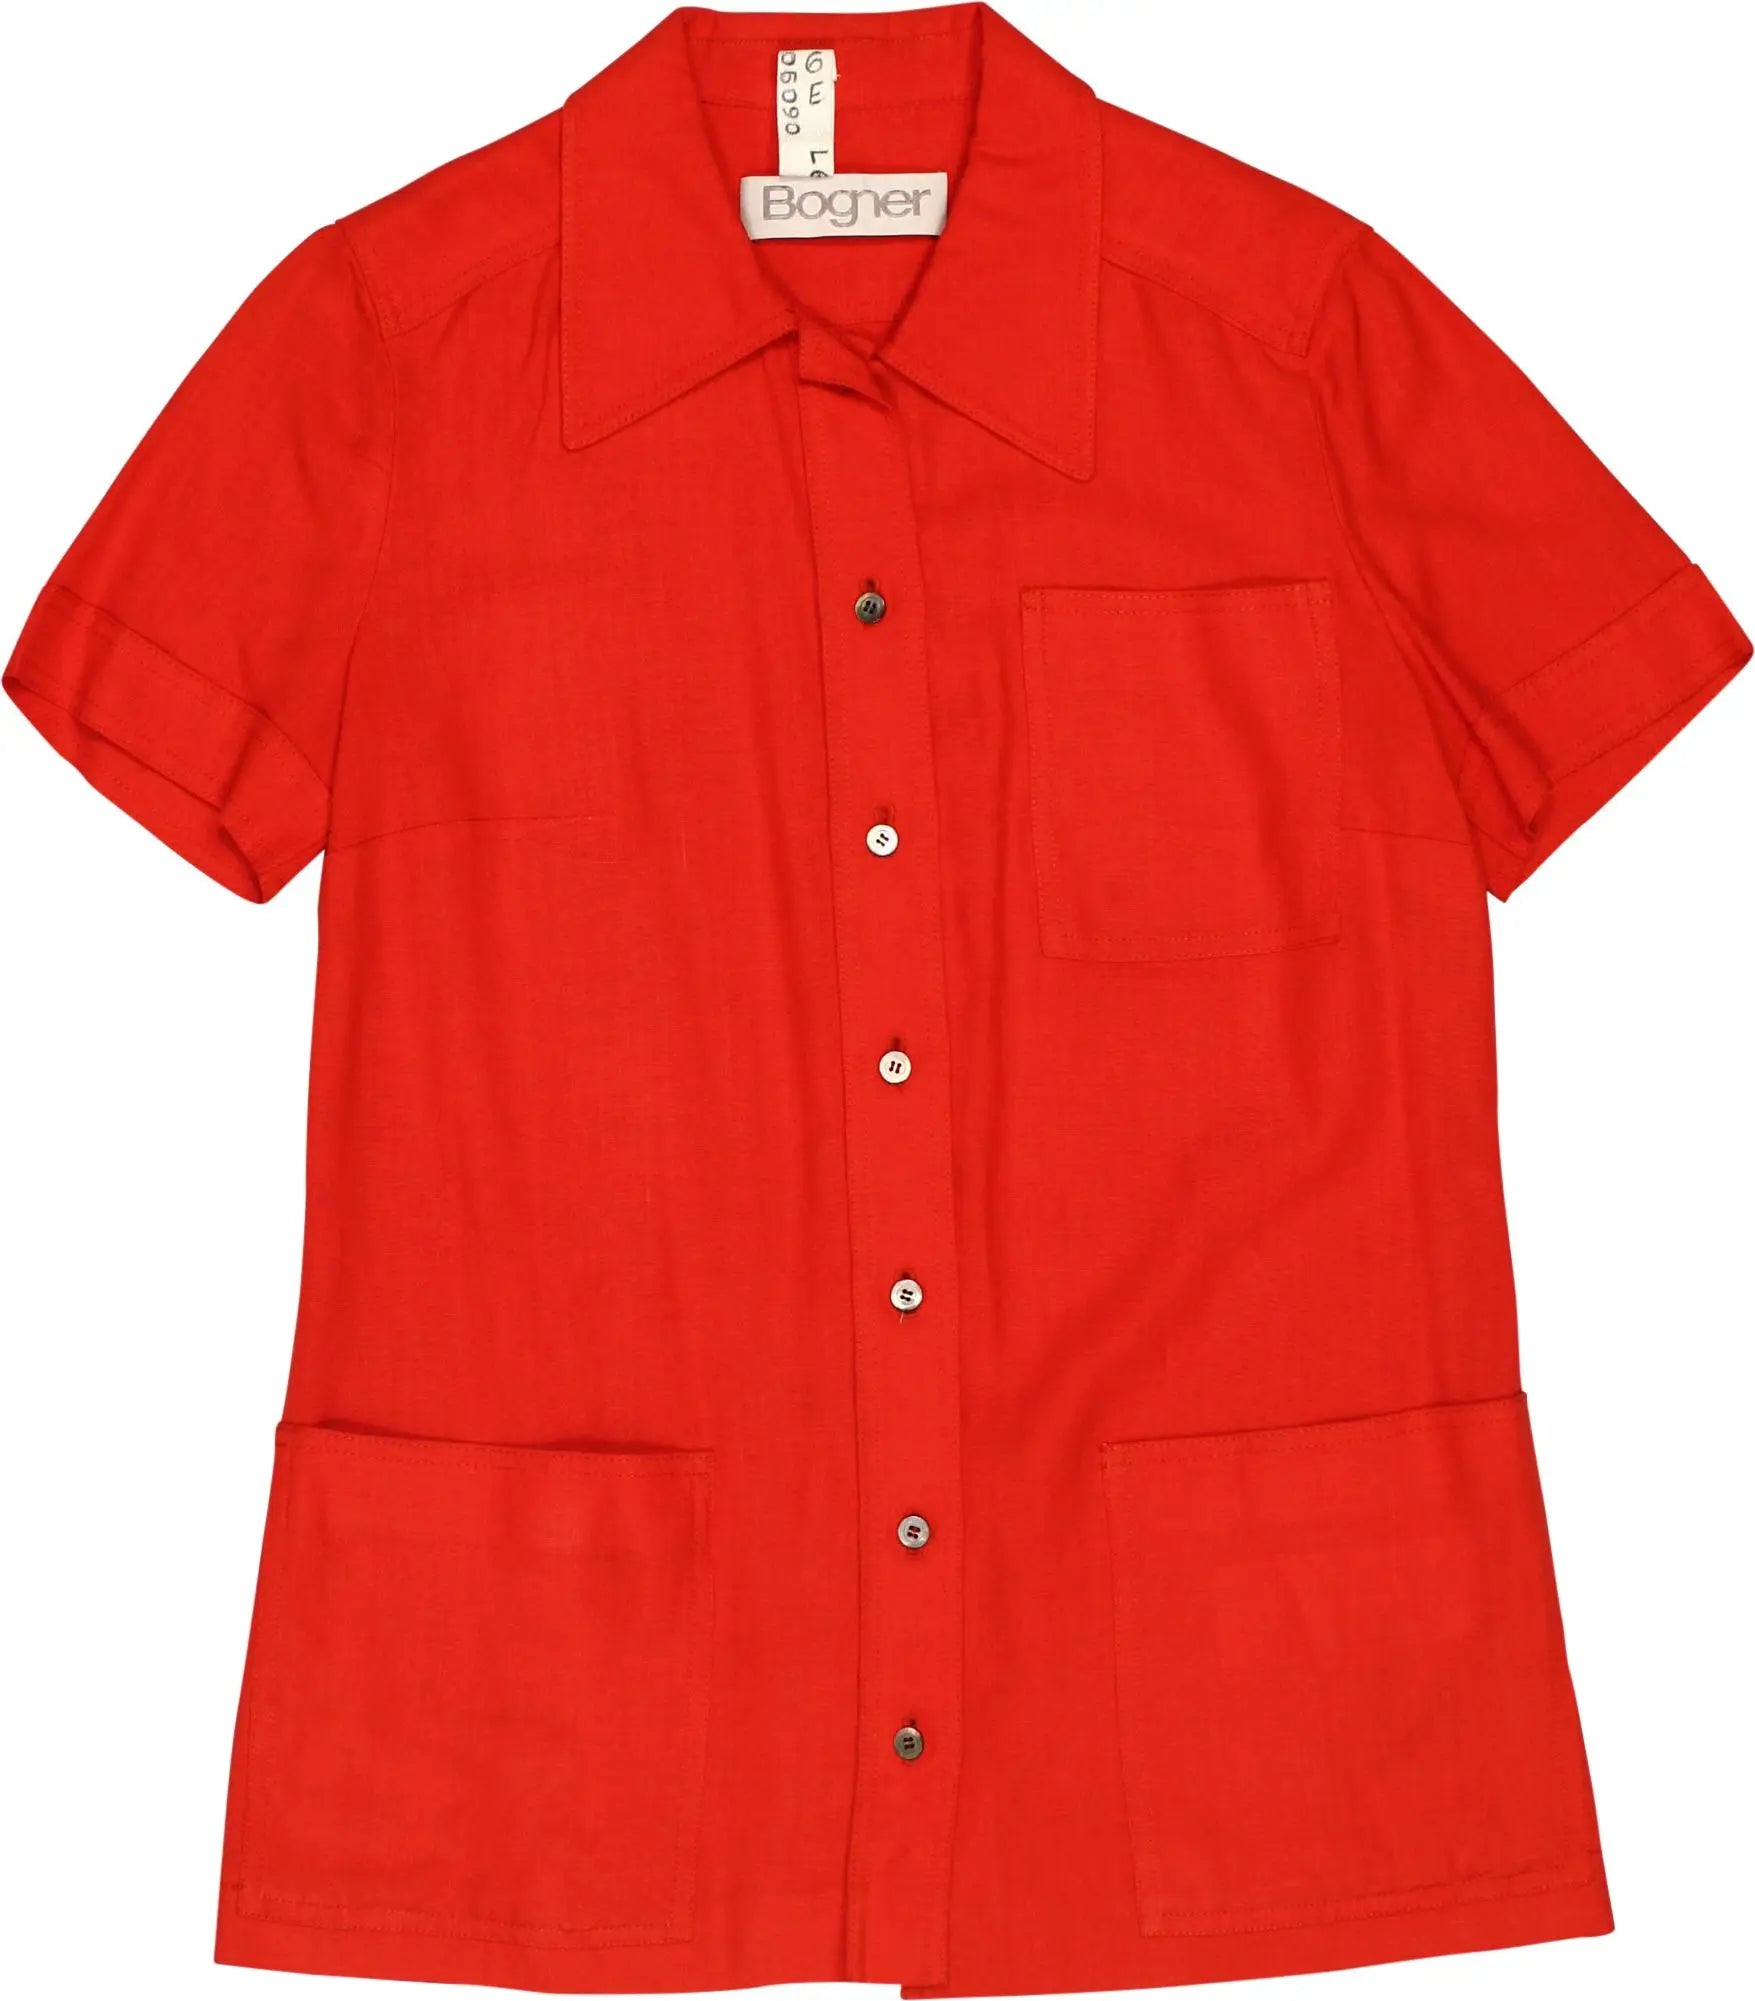 Bogner - 70 Short Sleeve Shirt- ThriftTale.com - Vintage and second handclothing